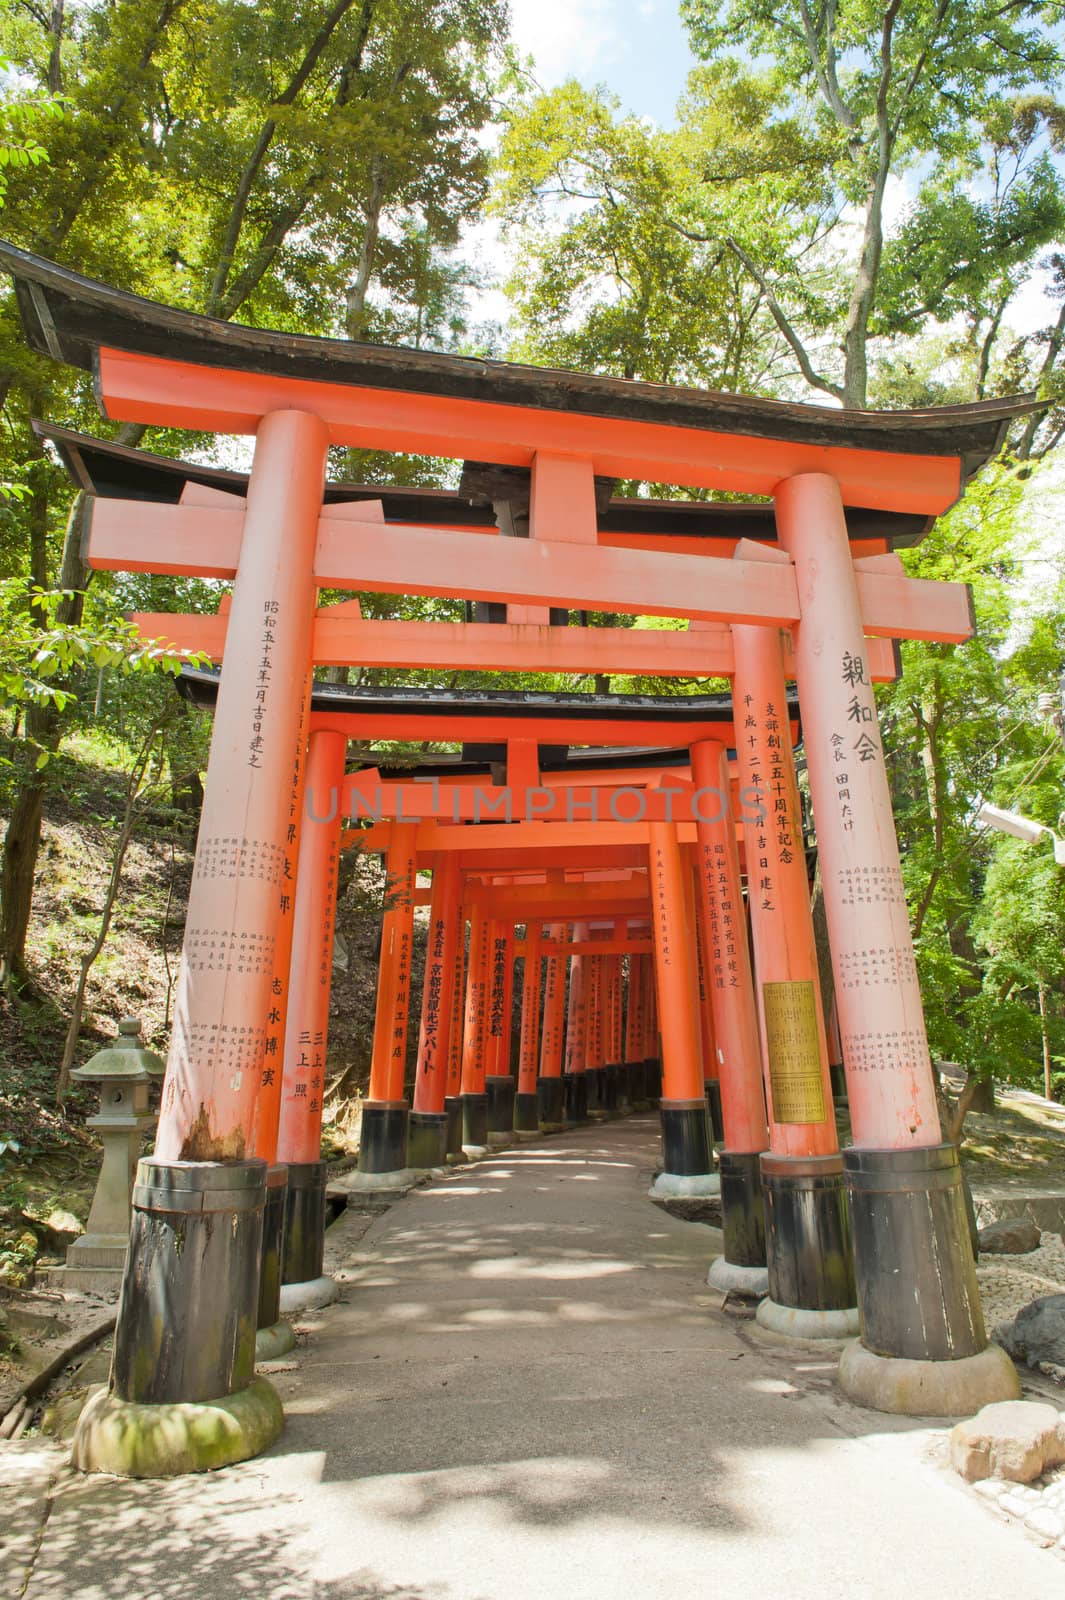 Famous shinto shrine of Fushimi Inari Taisha near Kyoto includes around 1300 orange torii gates, Japan